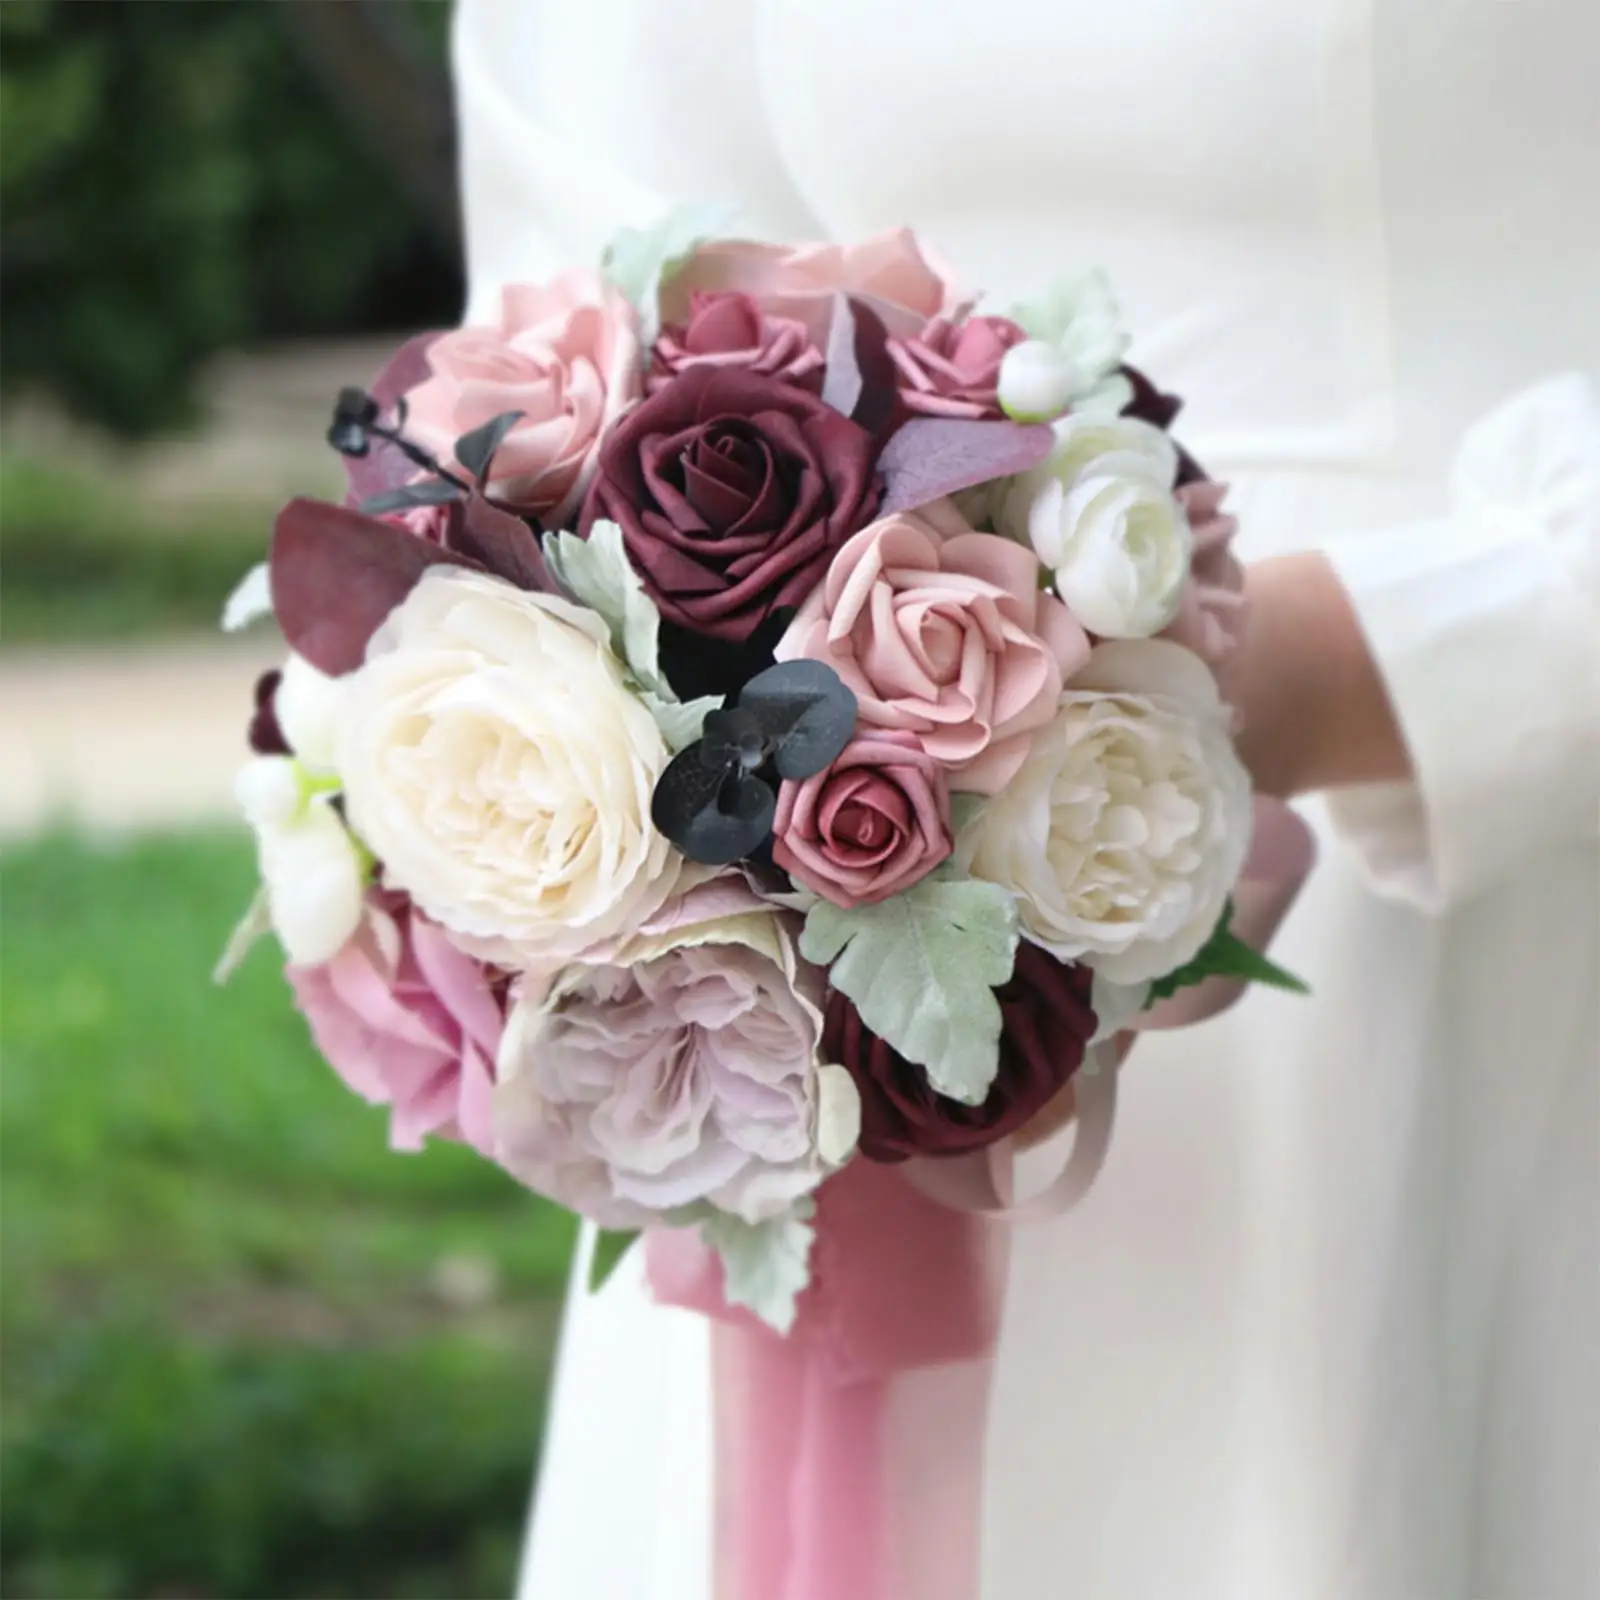 Silk Cloth Bridal Bouquet Elegant Arrangements for Activity Outdoor Event Holiday Decor